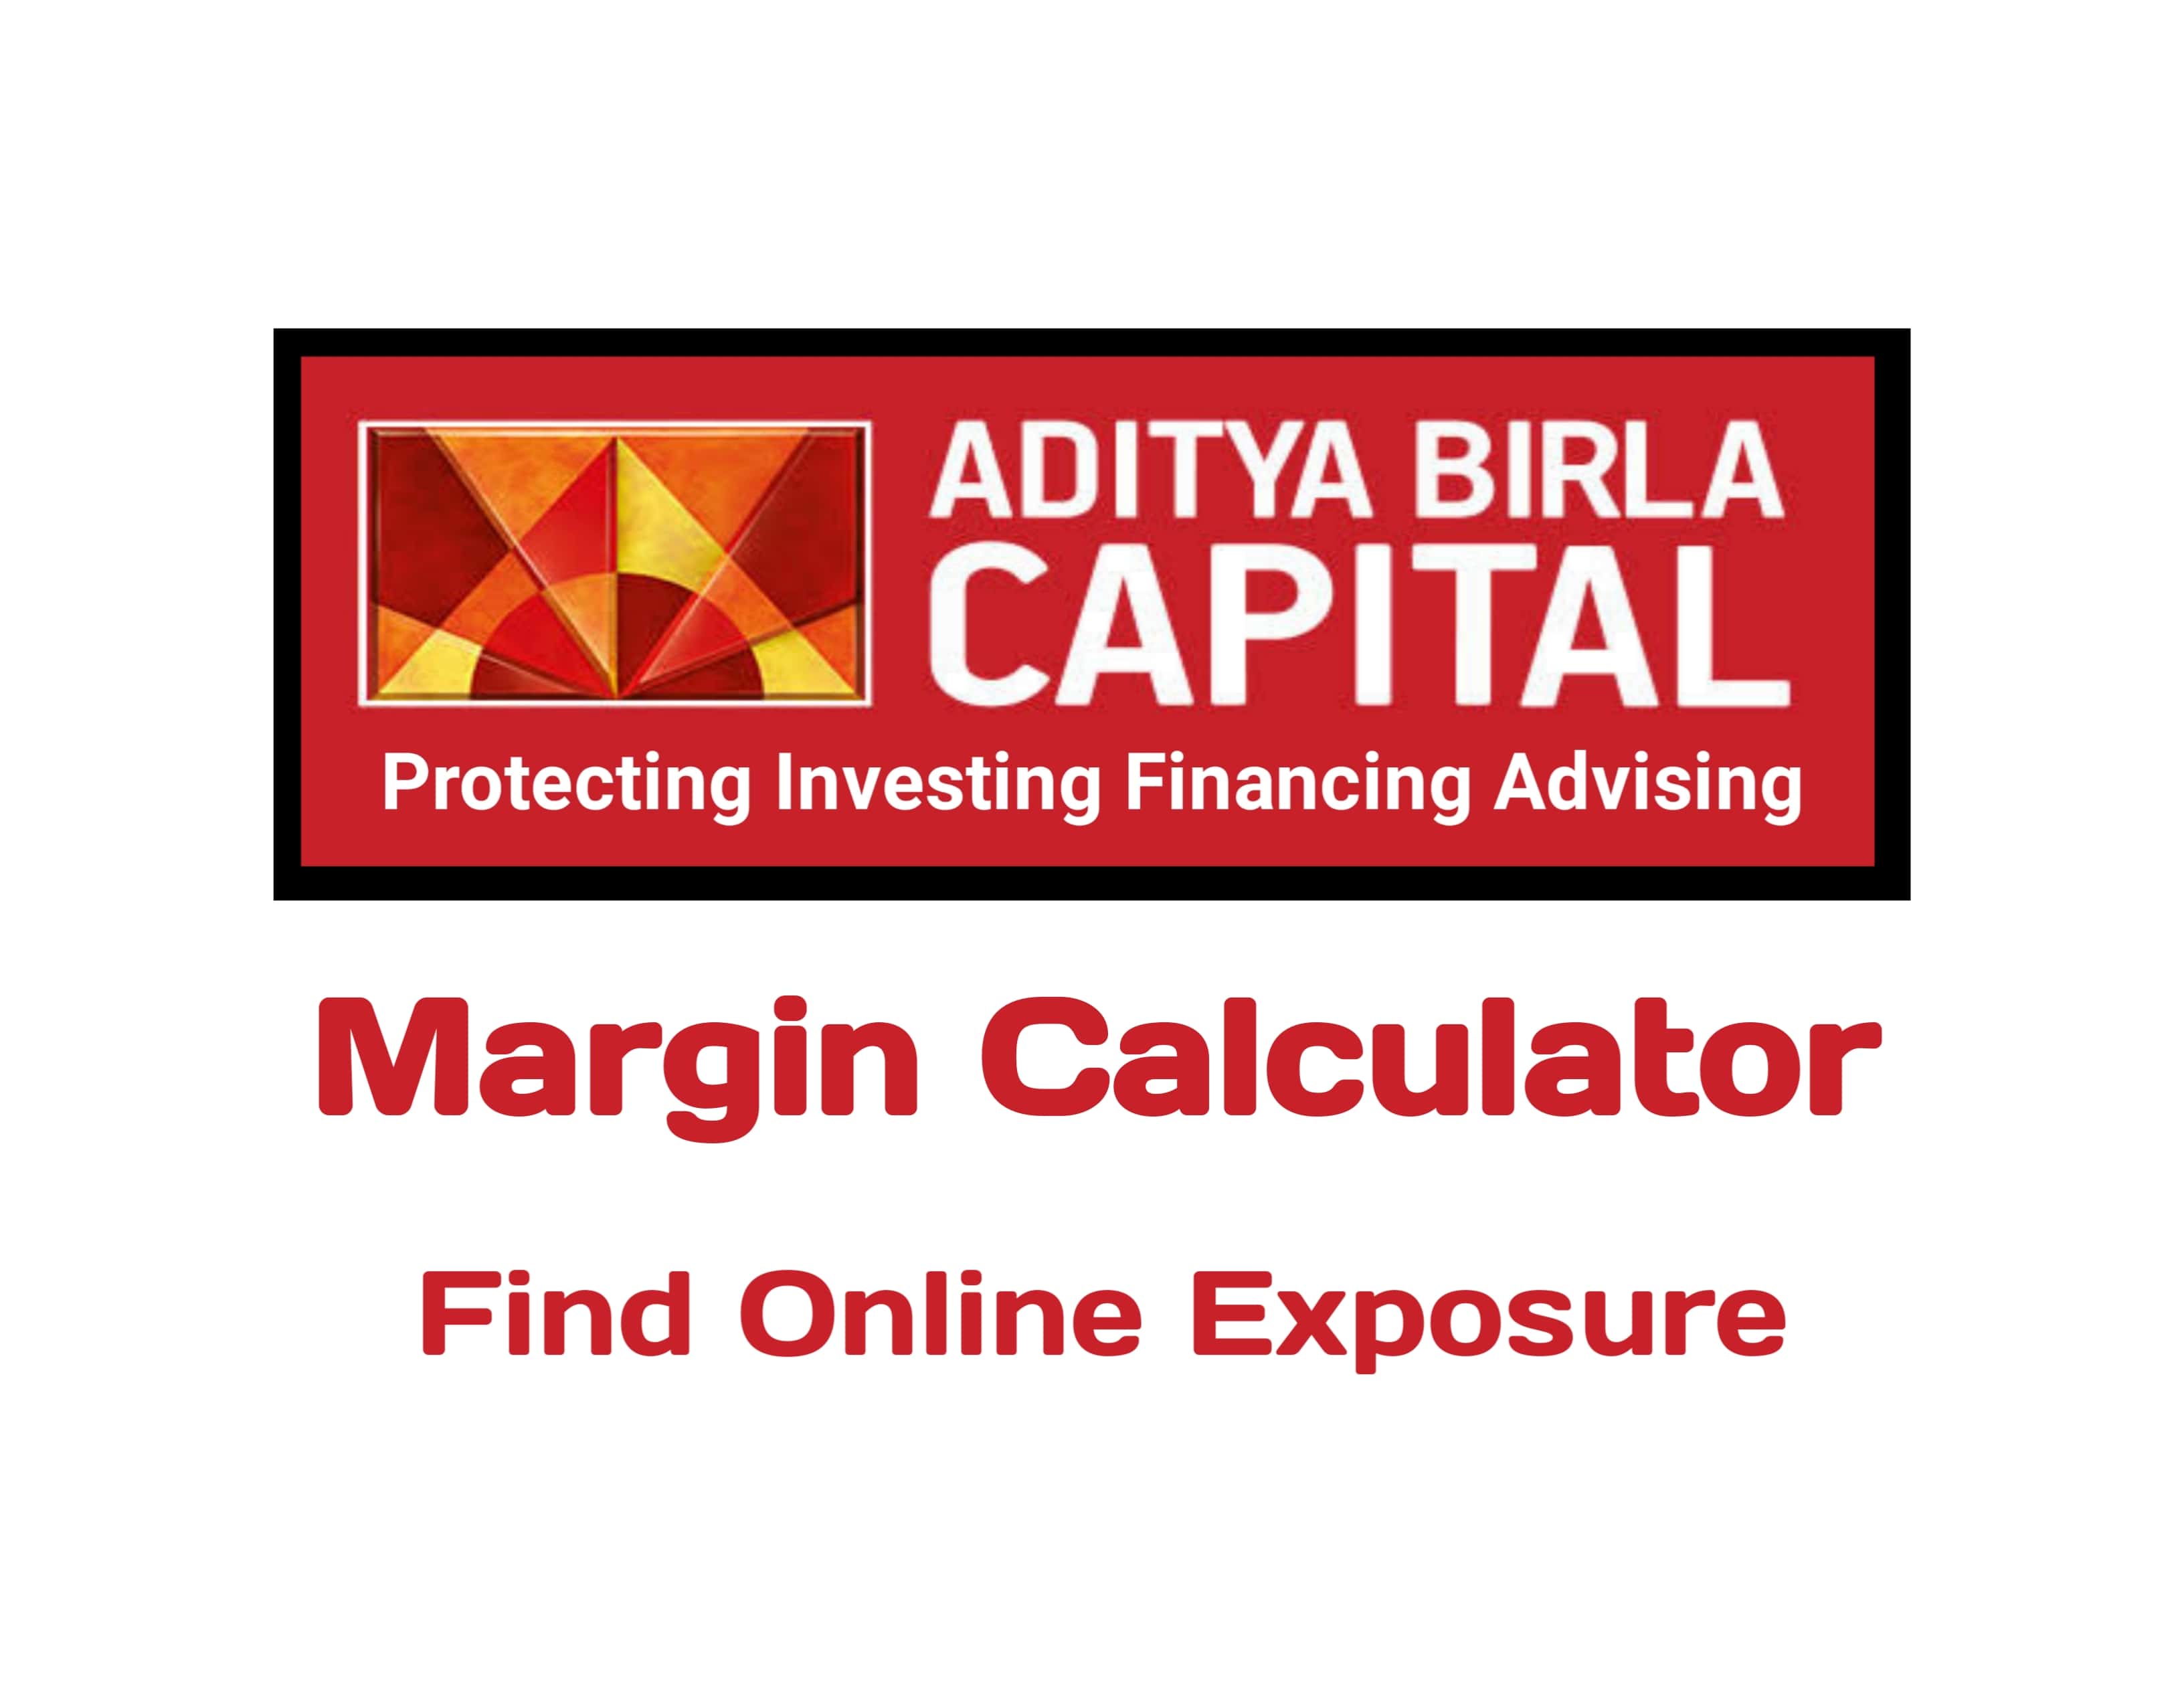 Aditya Birla Capital Margin Calculator